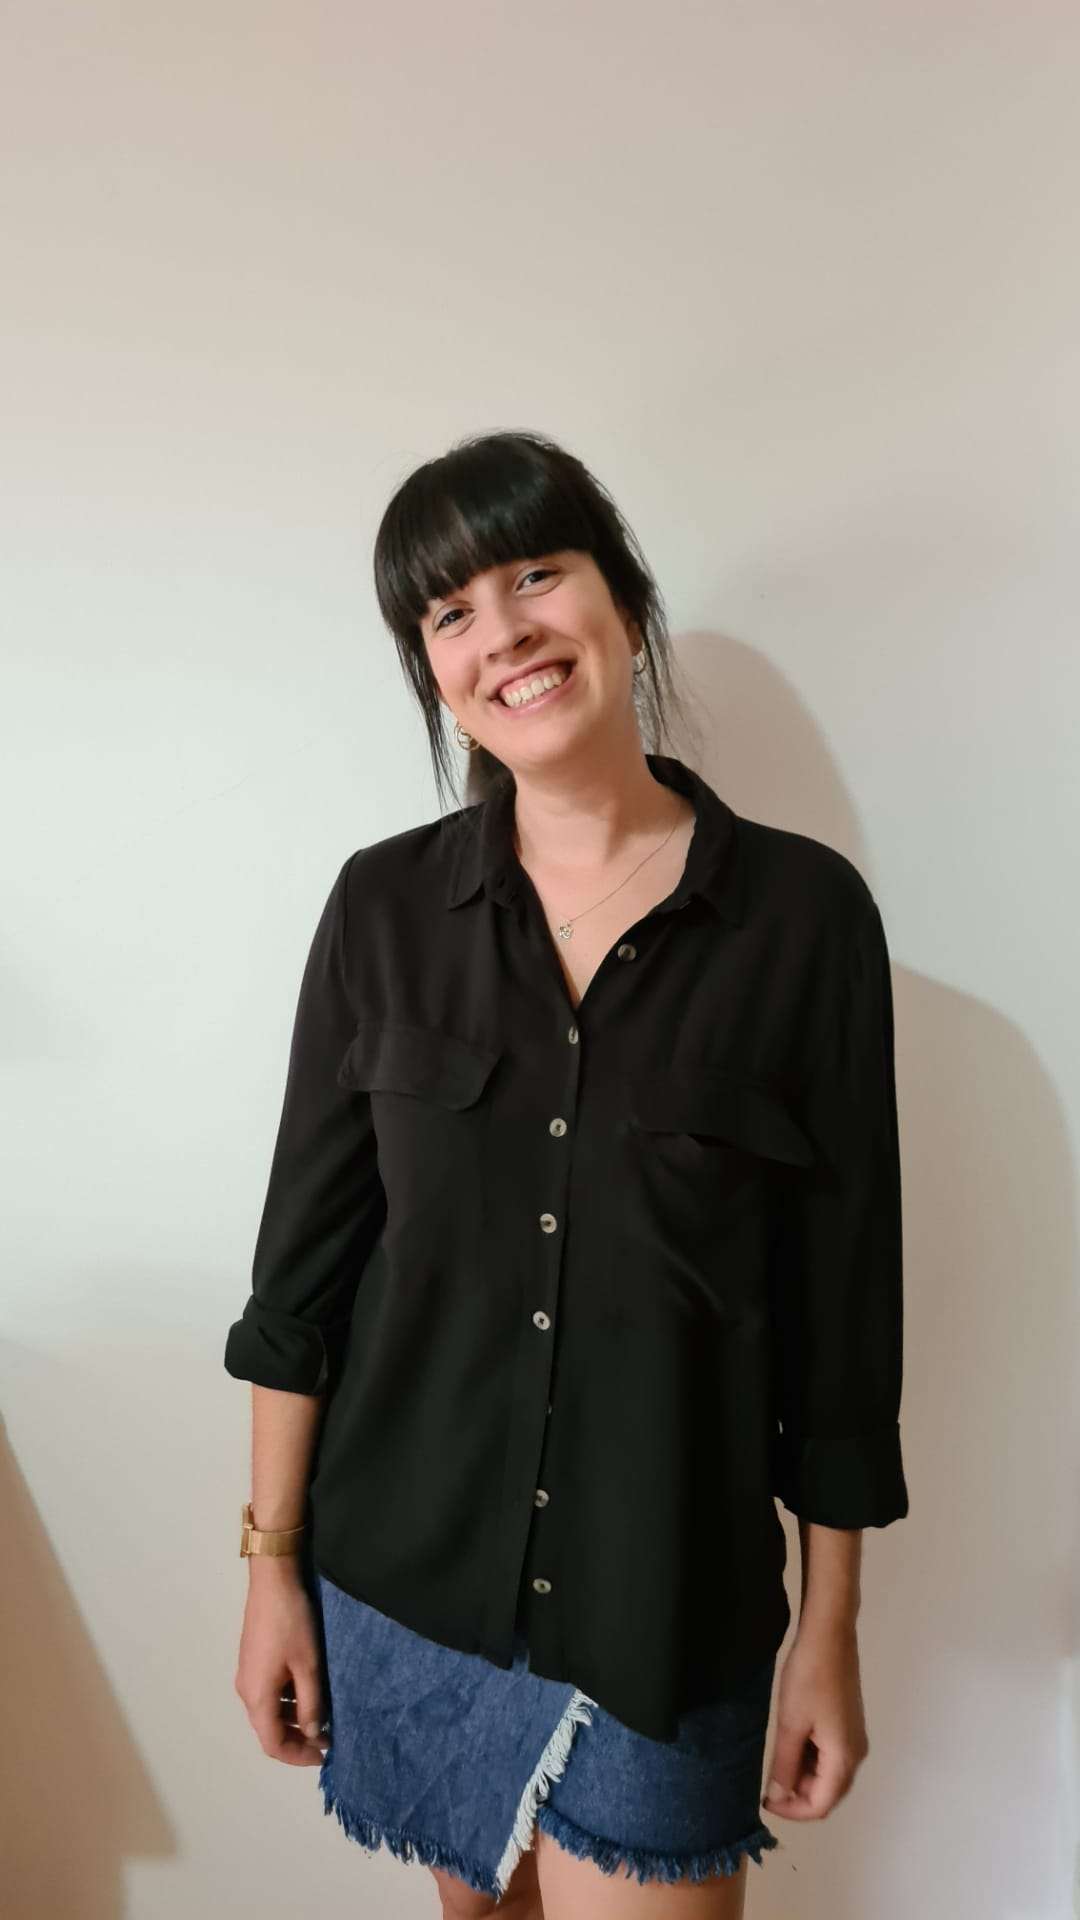 Sara Marques da Costa | Nutricionista 4712N - Lisboa - Nutricionista